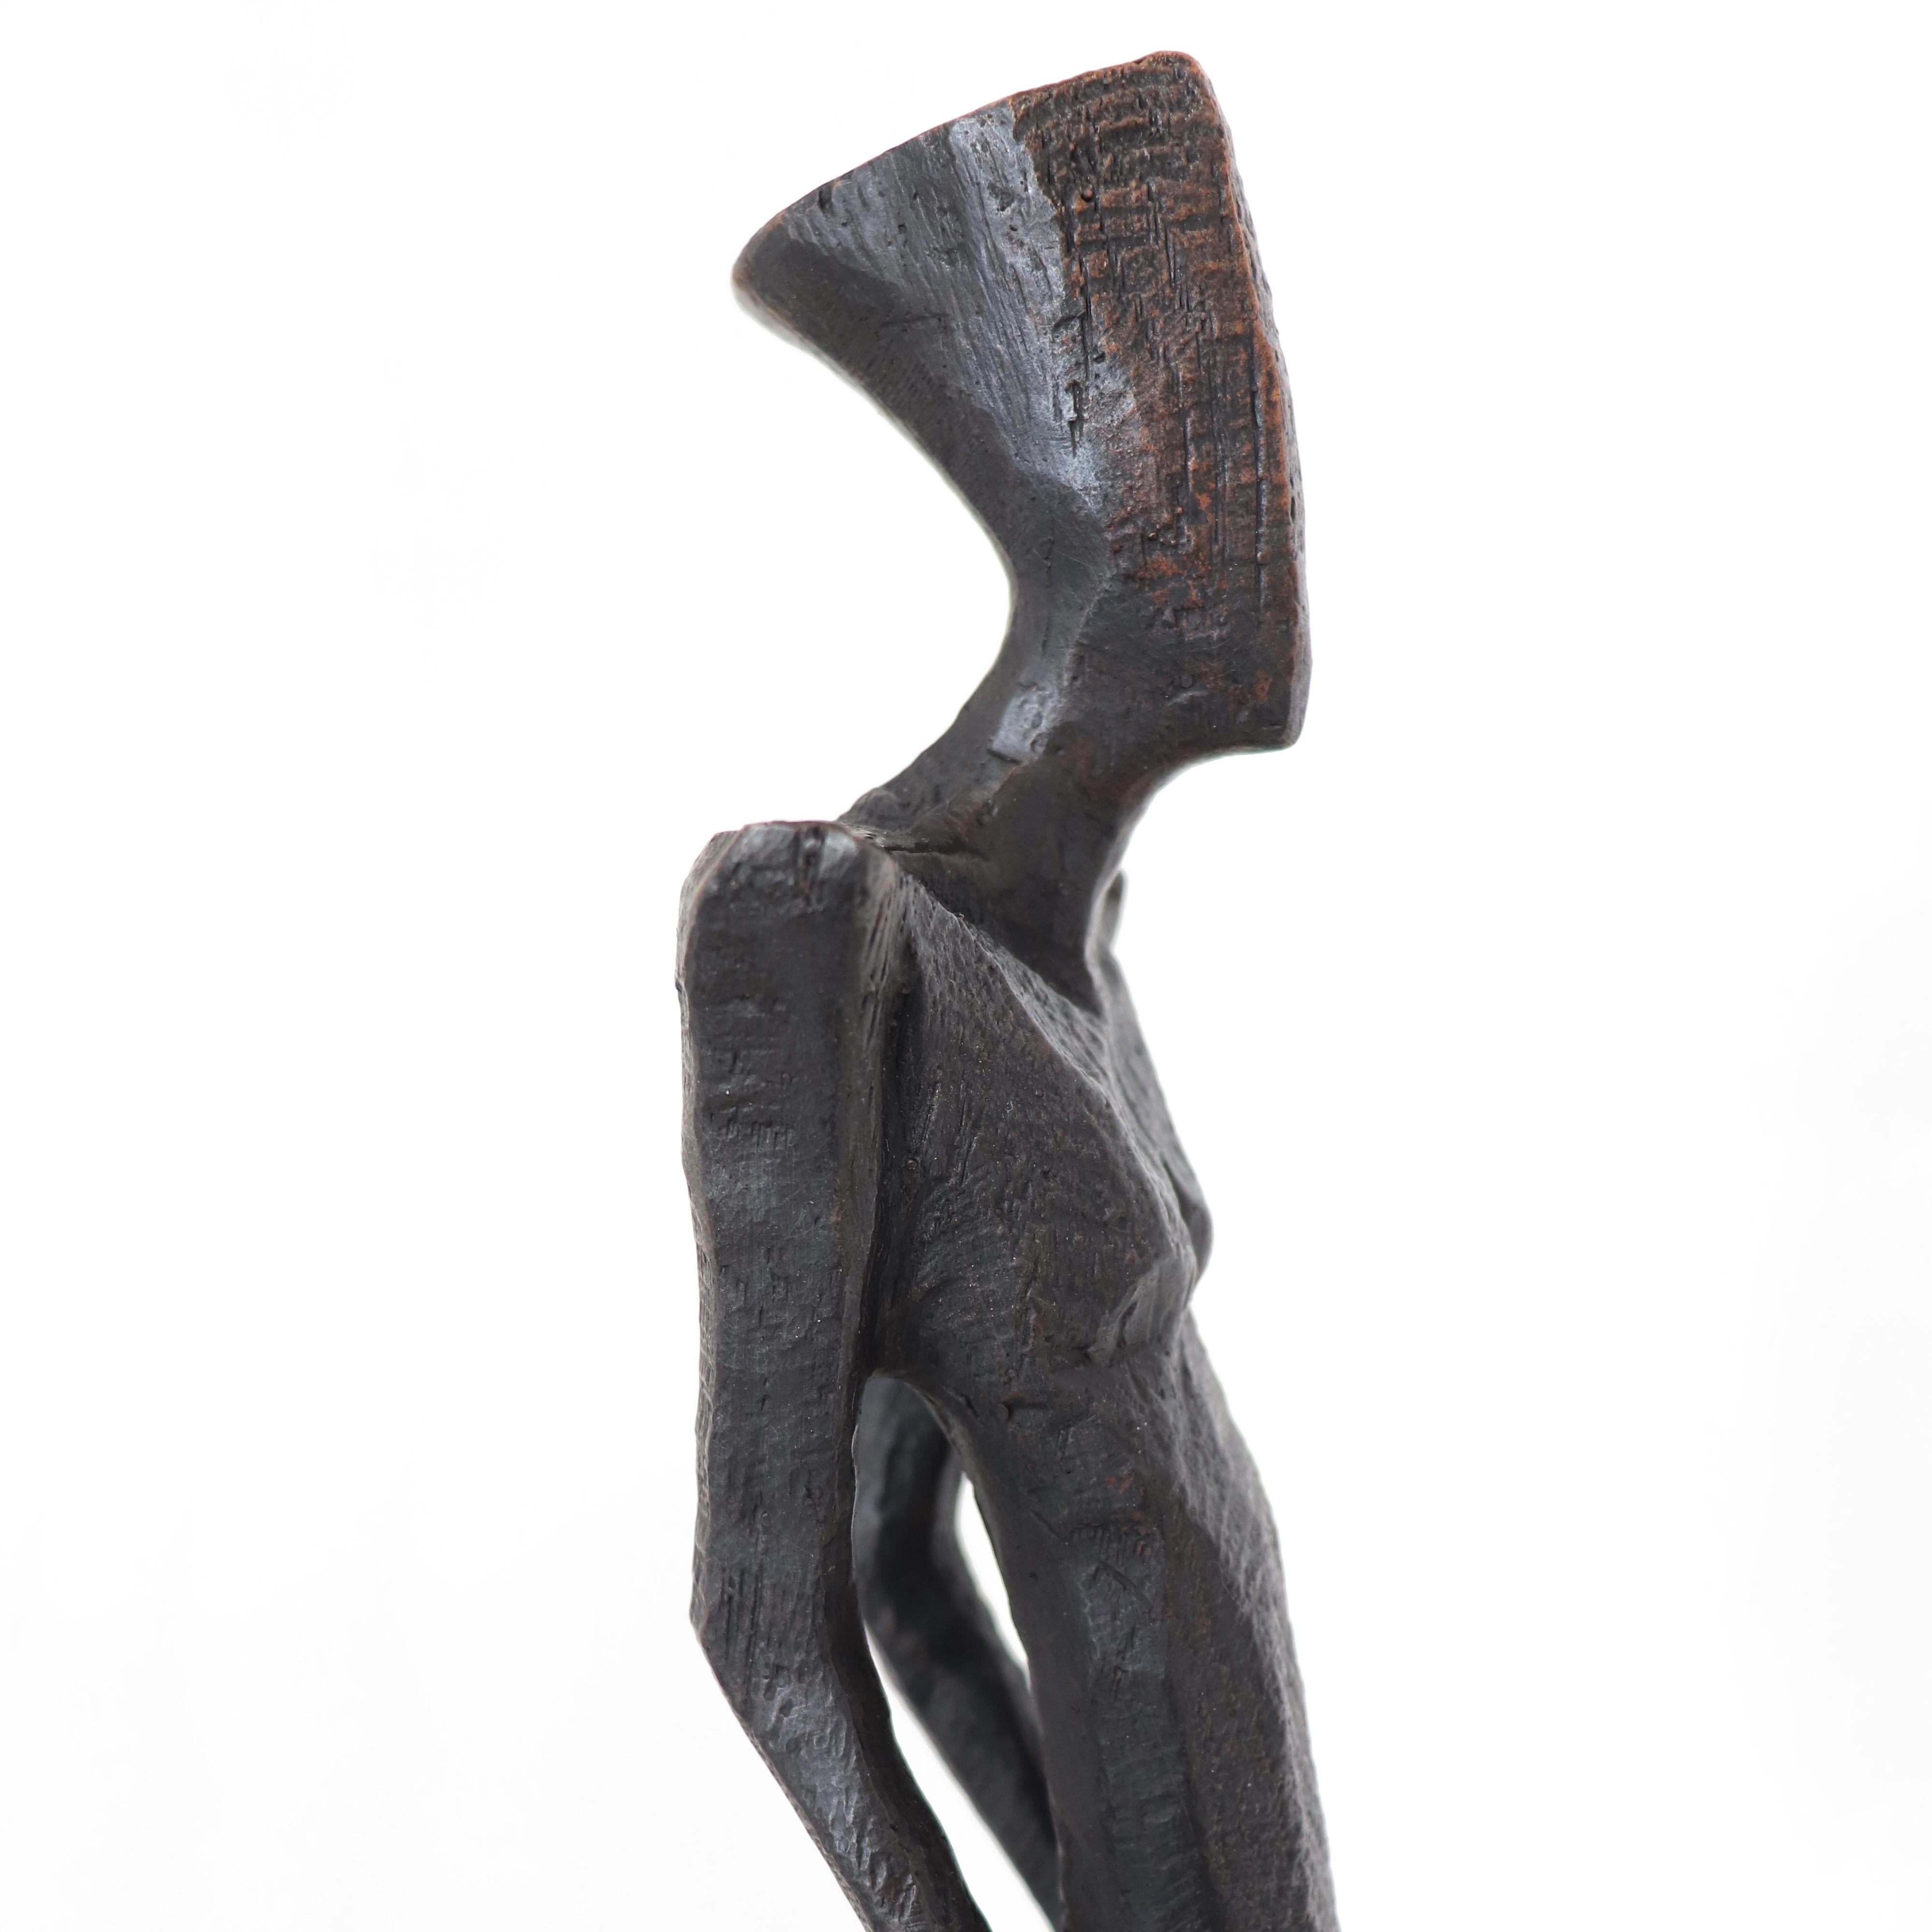 Antonio (1/25) - Abstract Sculpture by Nando Kallweit